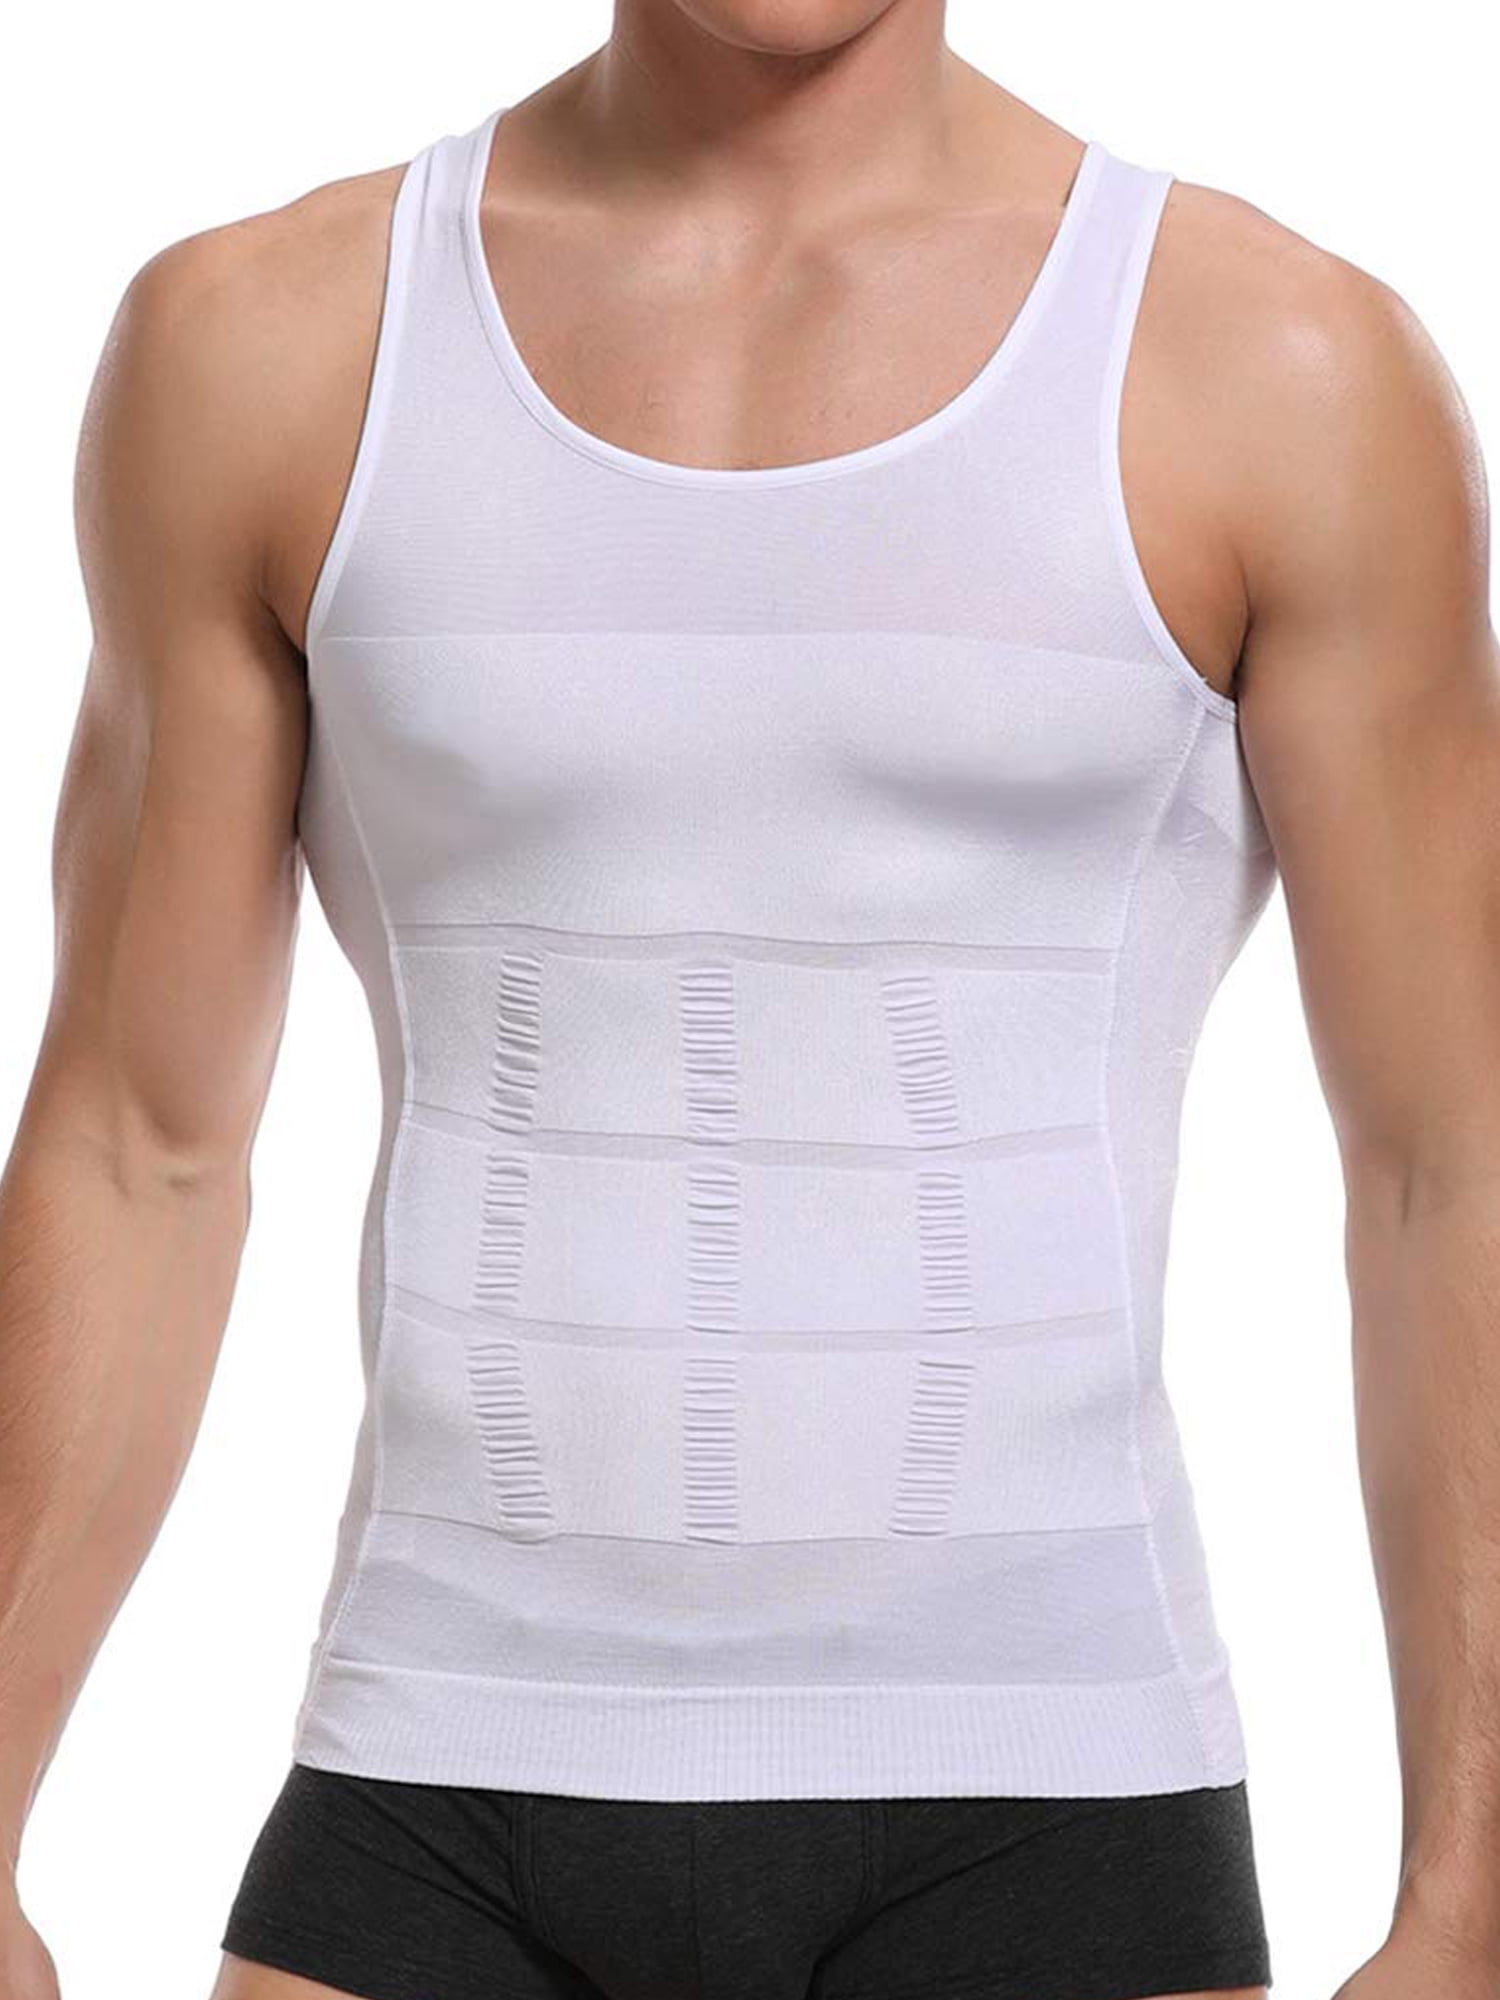 Men's Body Shaper Slimming Abdomen Compression Vest Shirt Tank Top Underwear US 